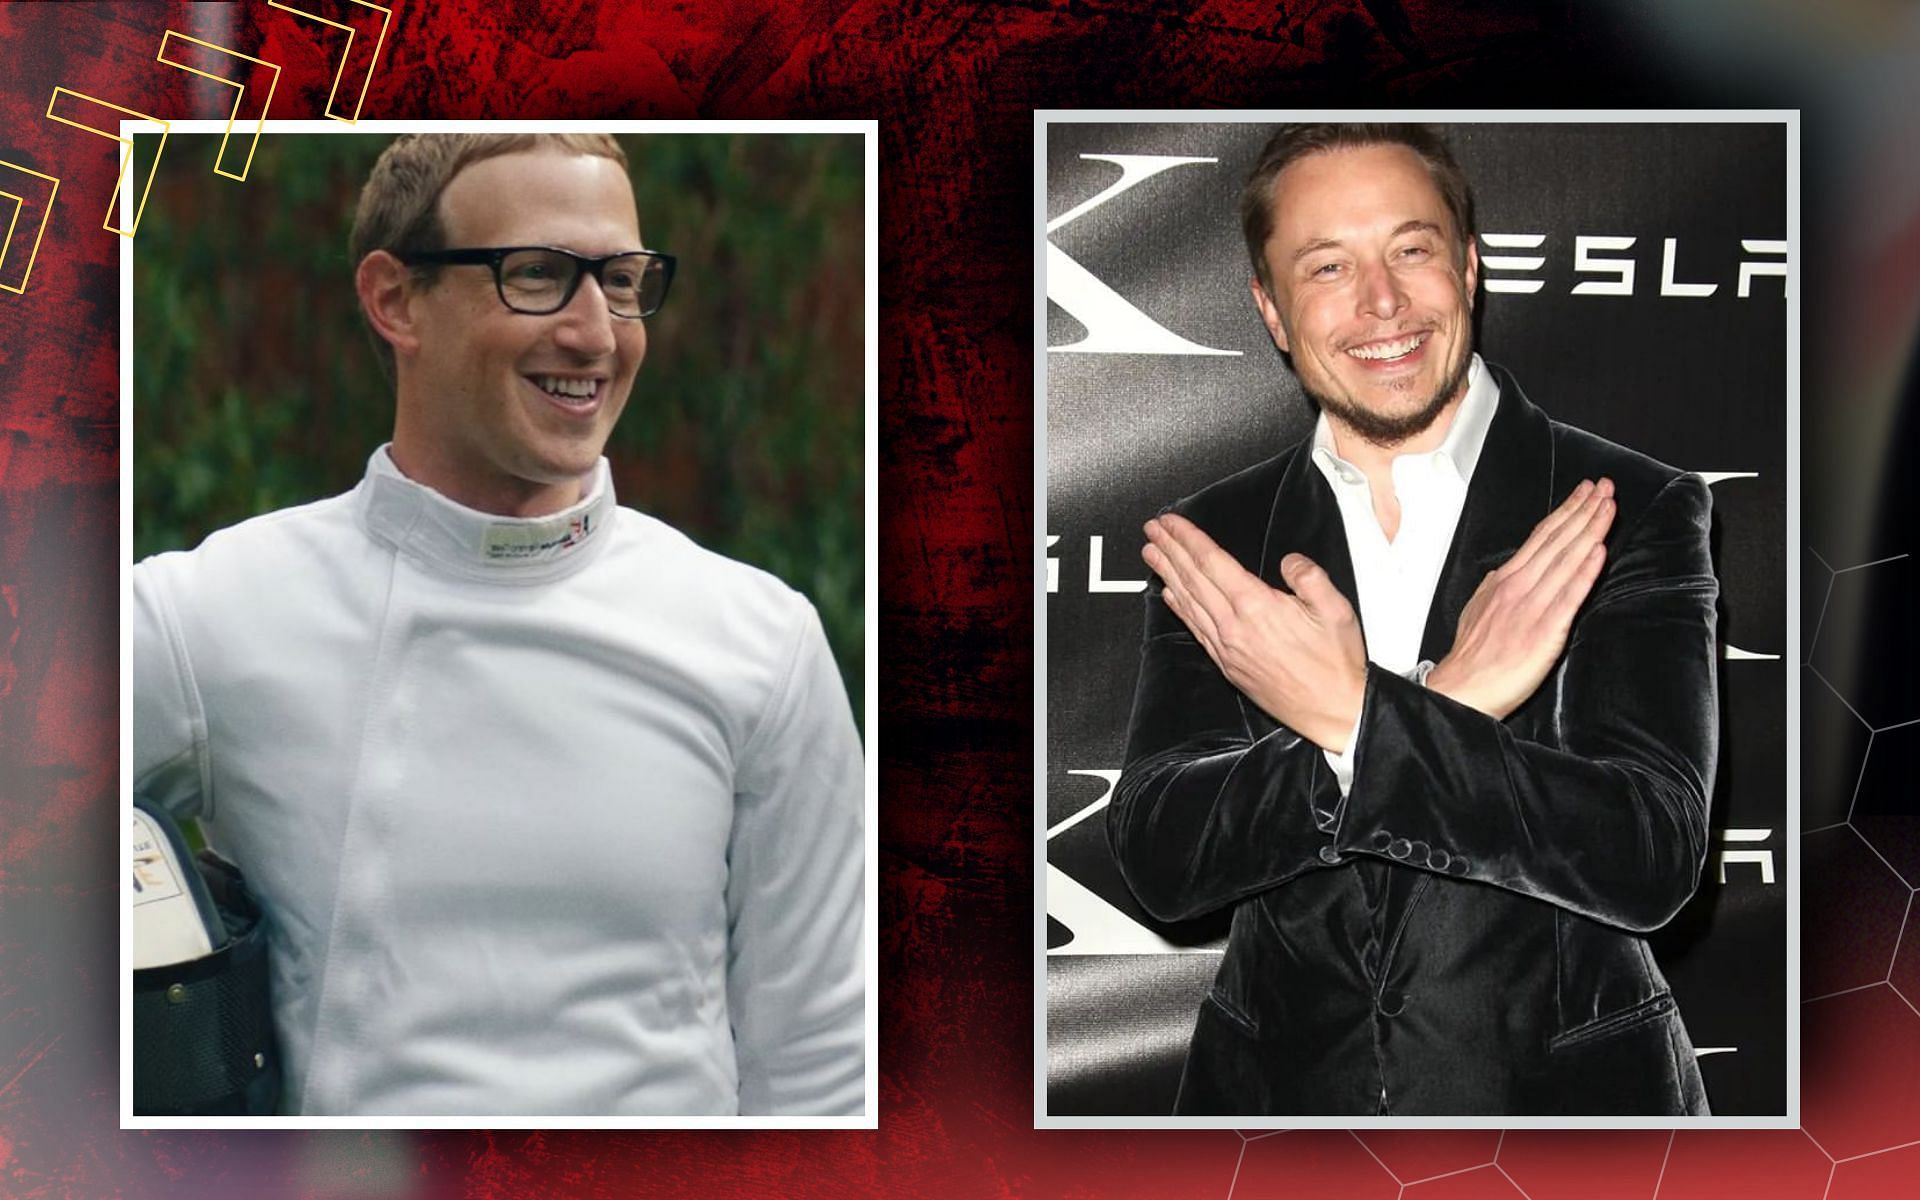 Elon Musk vs Mark Zuckerberg. [Image credits: @zuck and @elonmusk on Instagram]